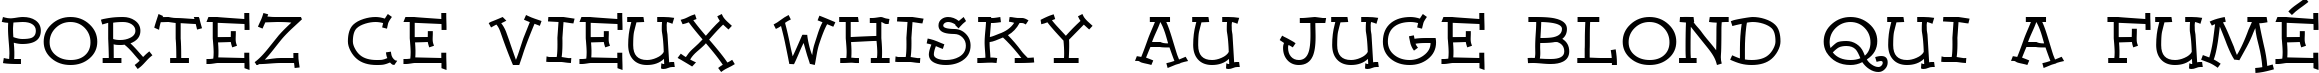 Пример написания шрифтом Dummies текста на французском